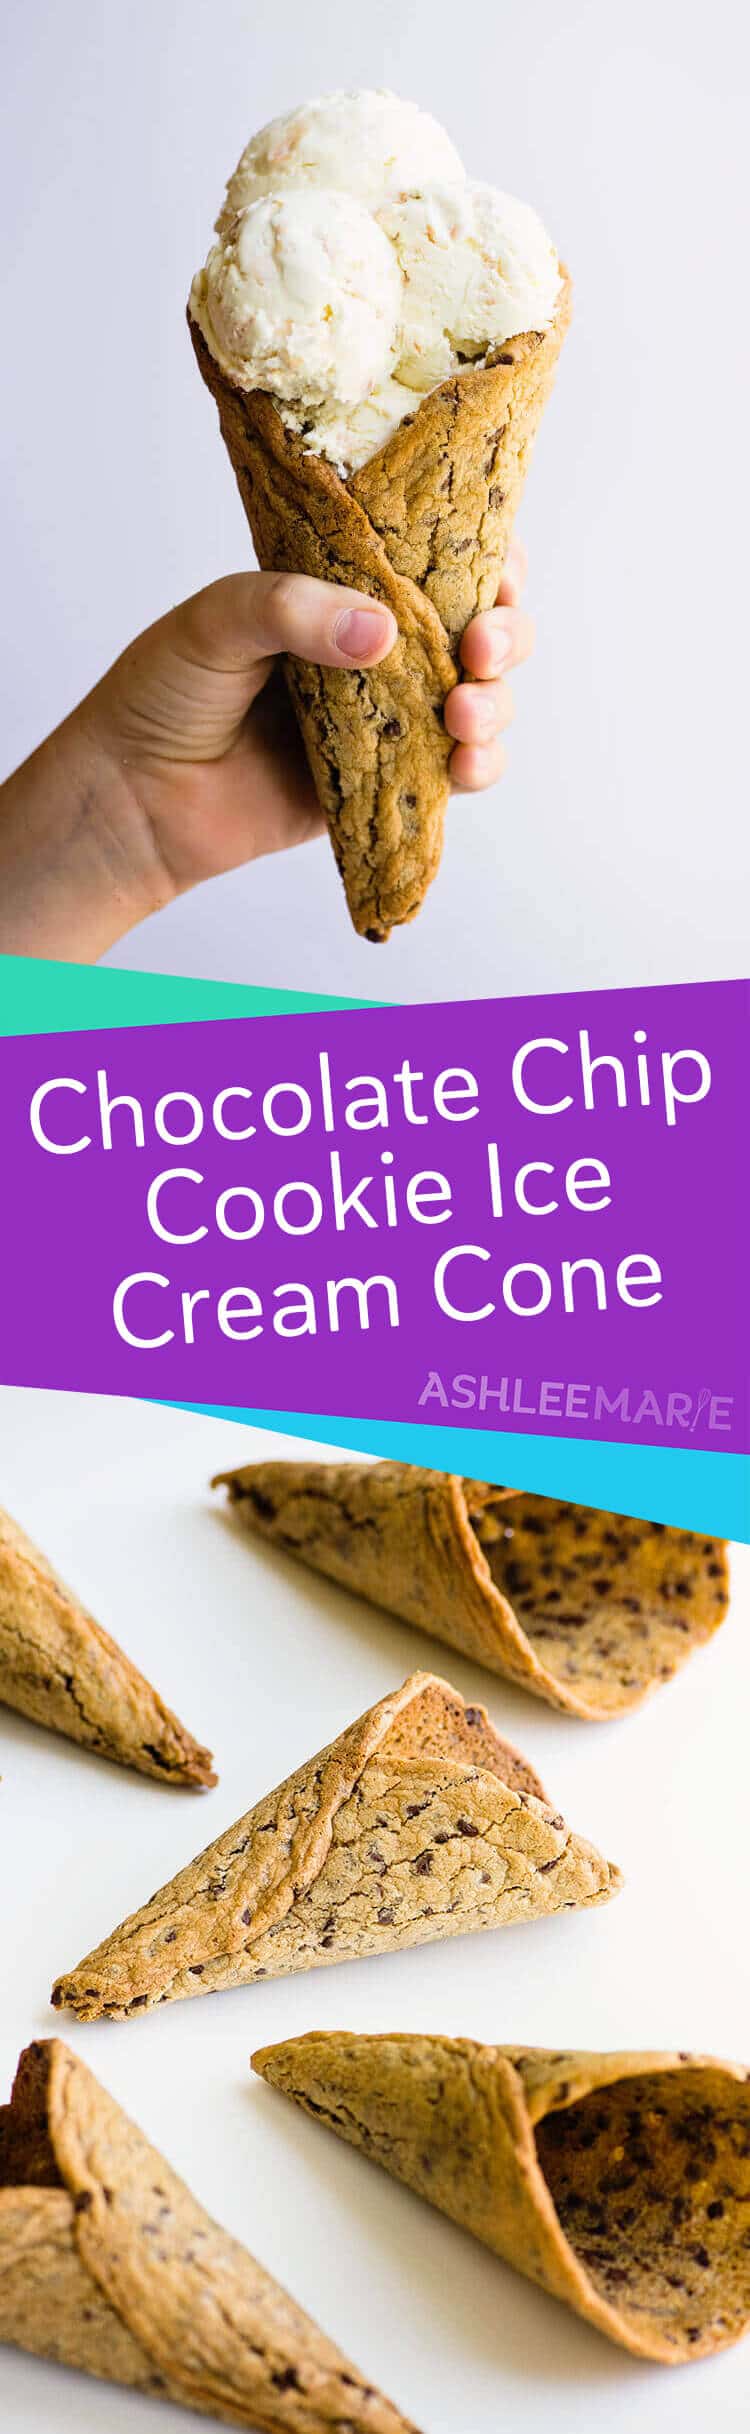 chocolate chip cookie ice cream cone